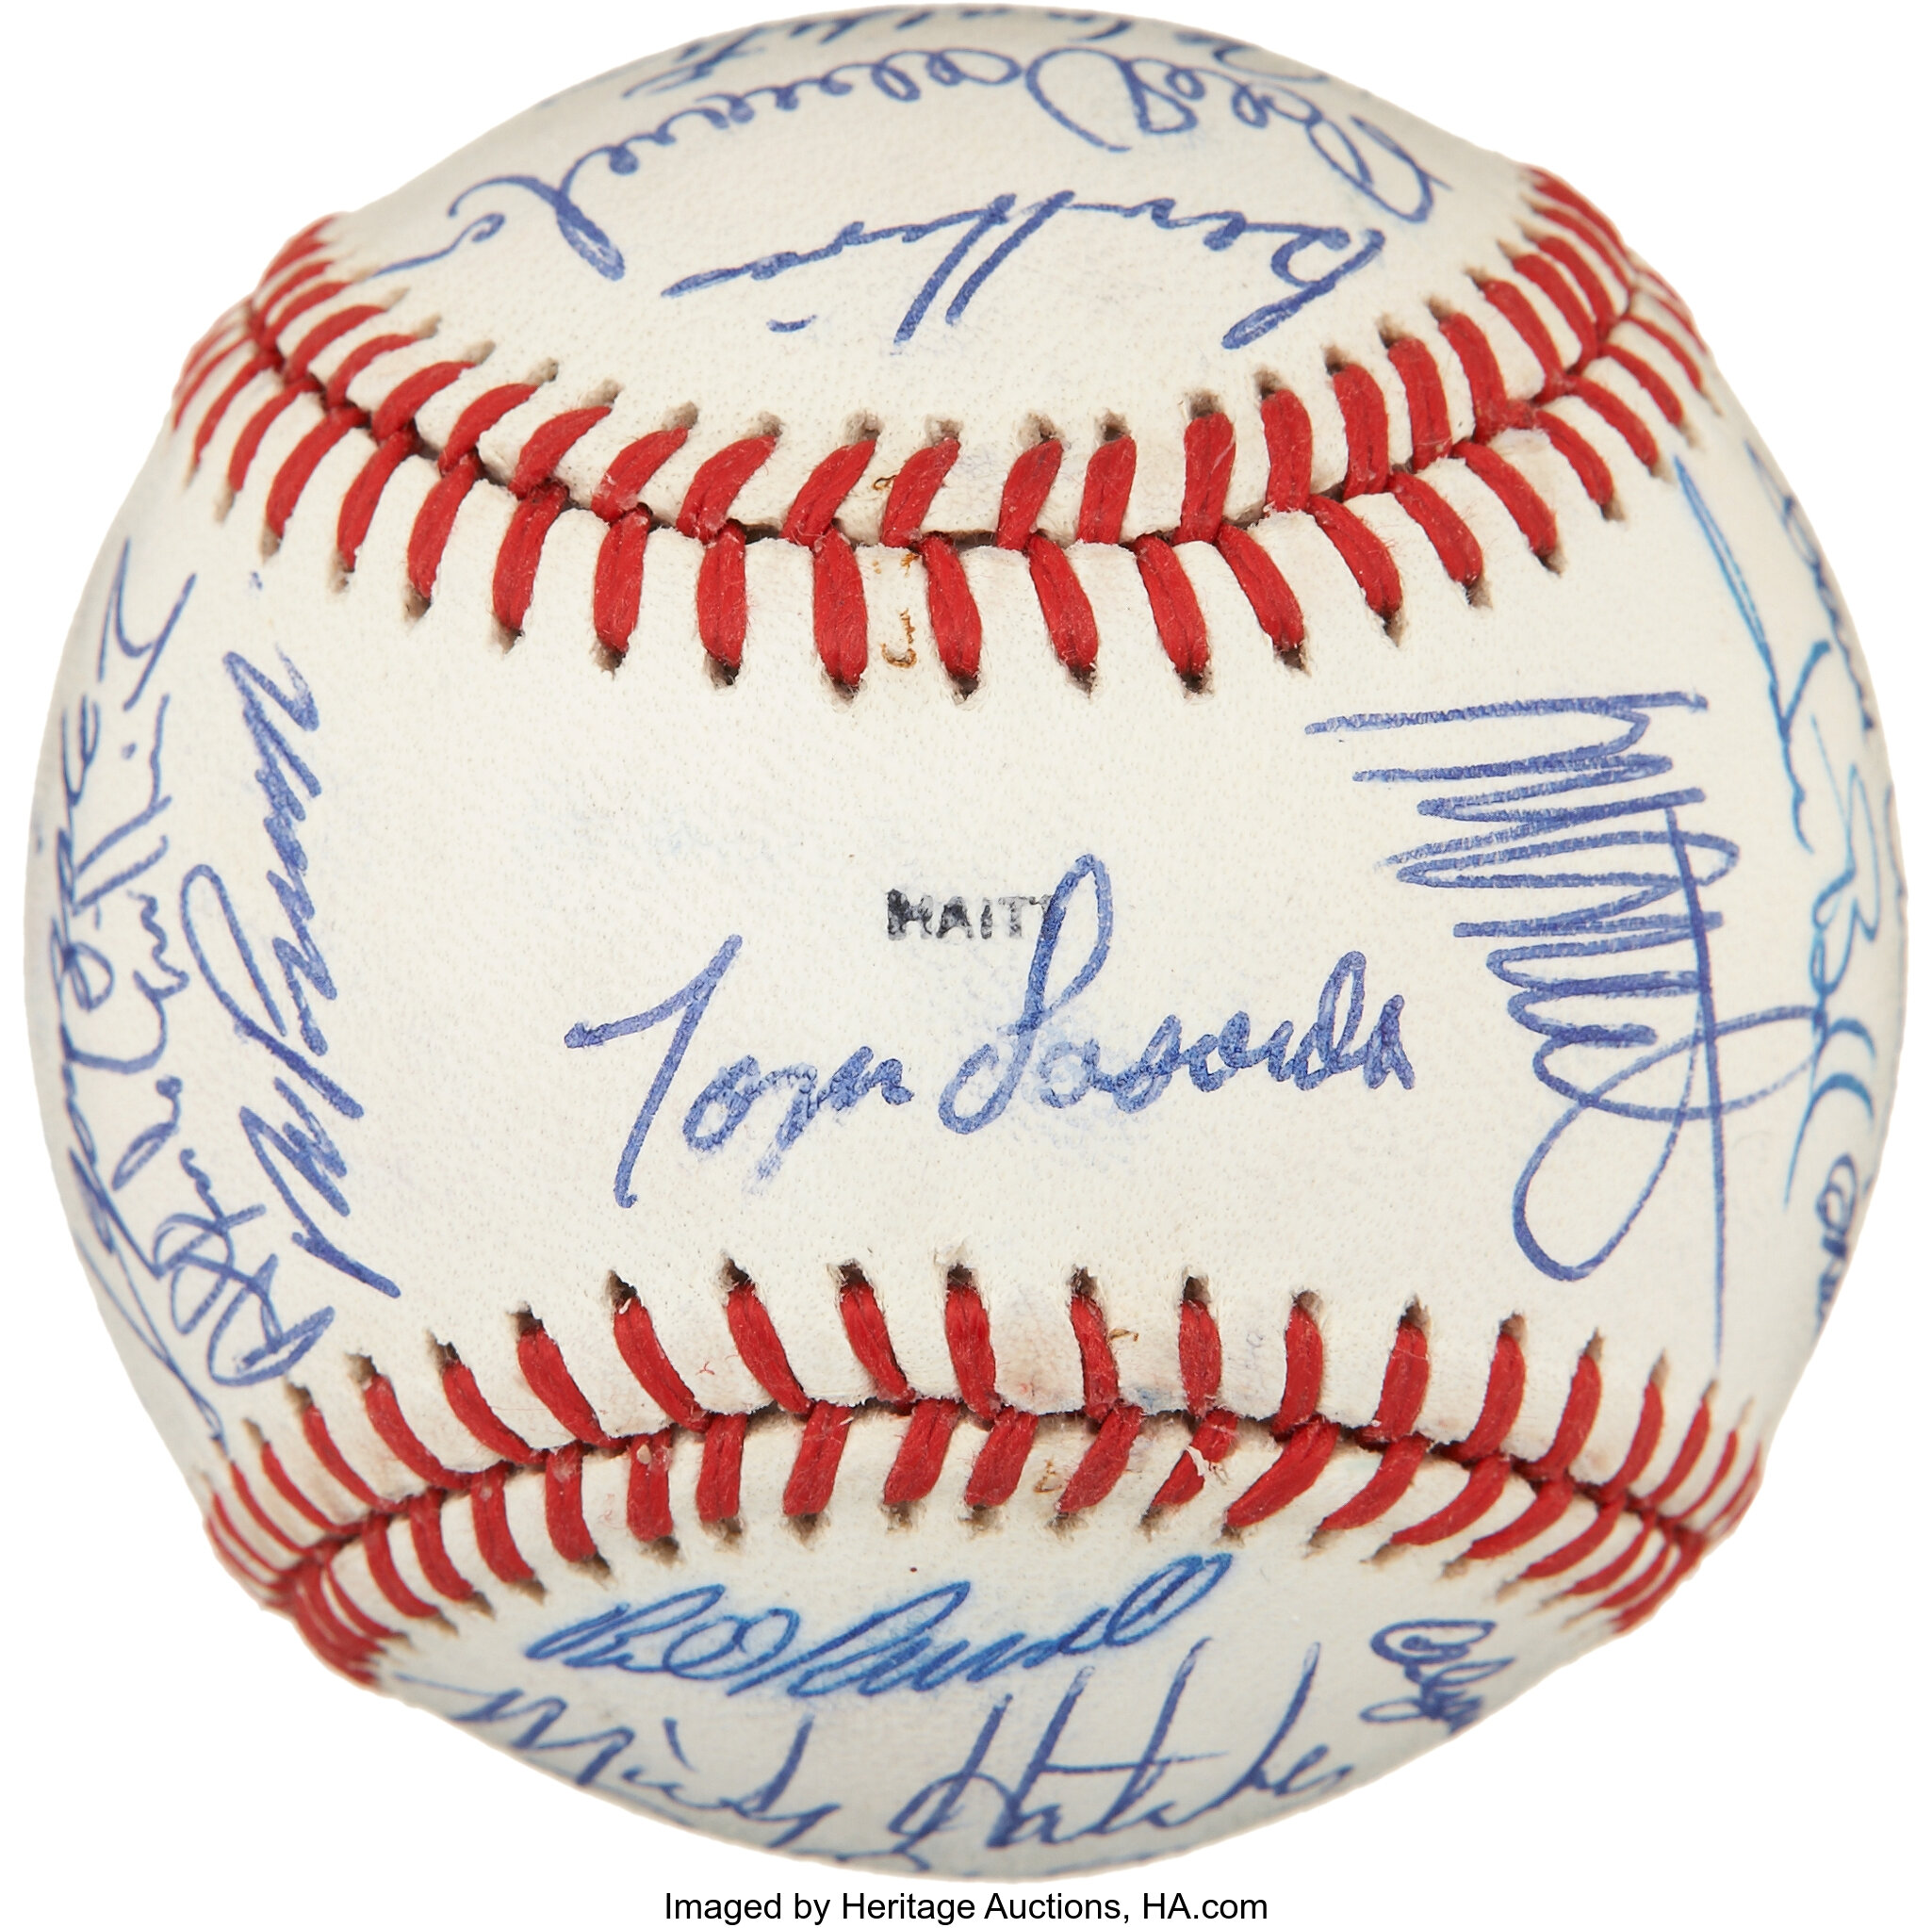 Team Autographed Signed Dodgers Baseball 